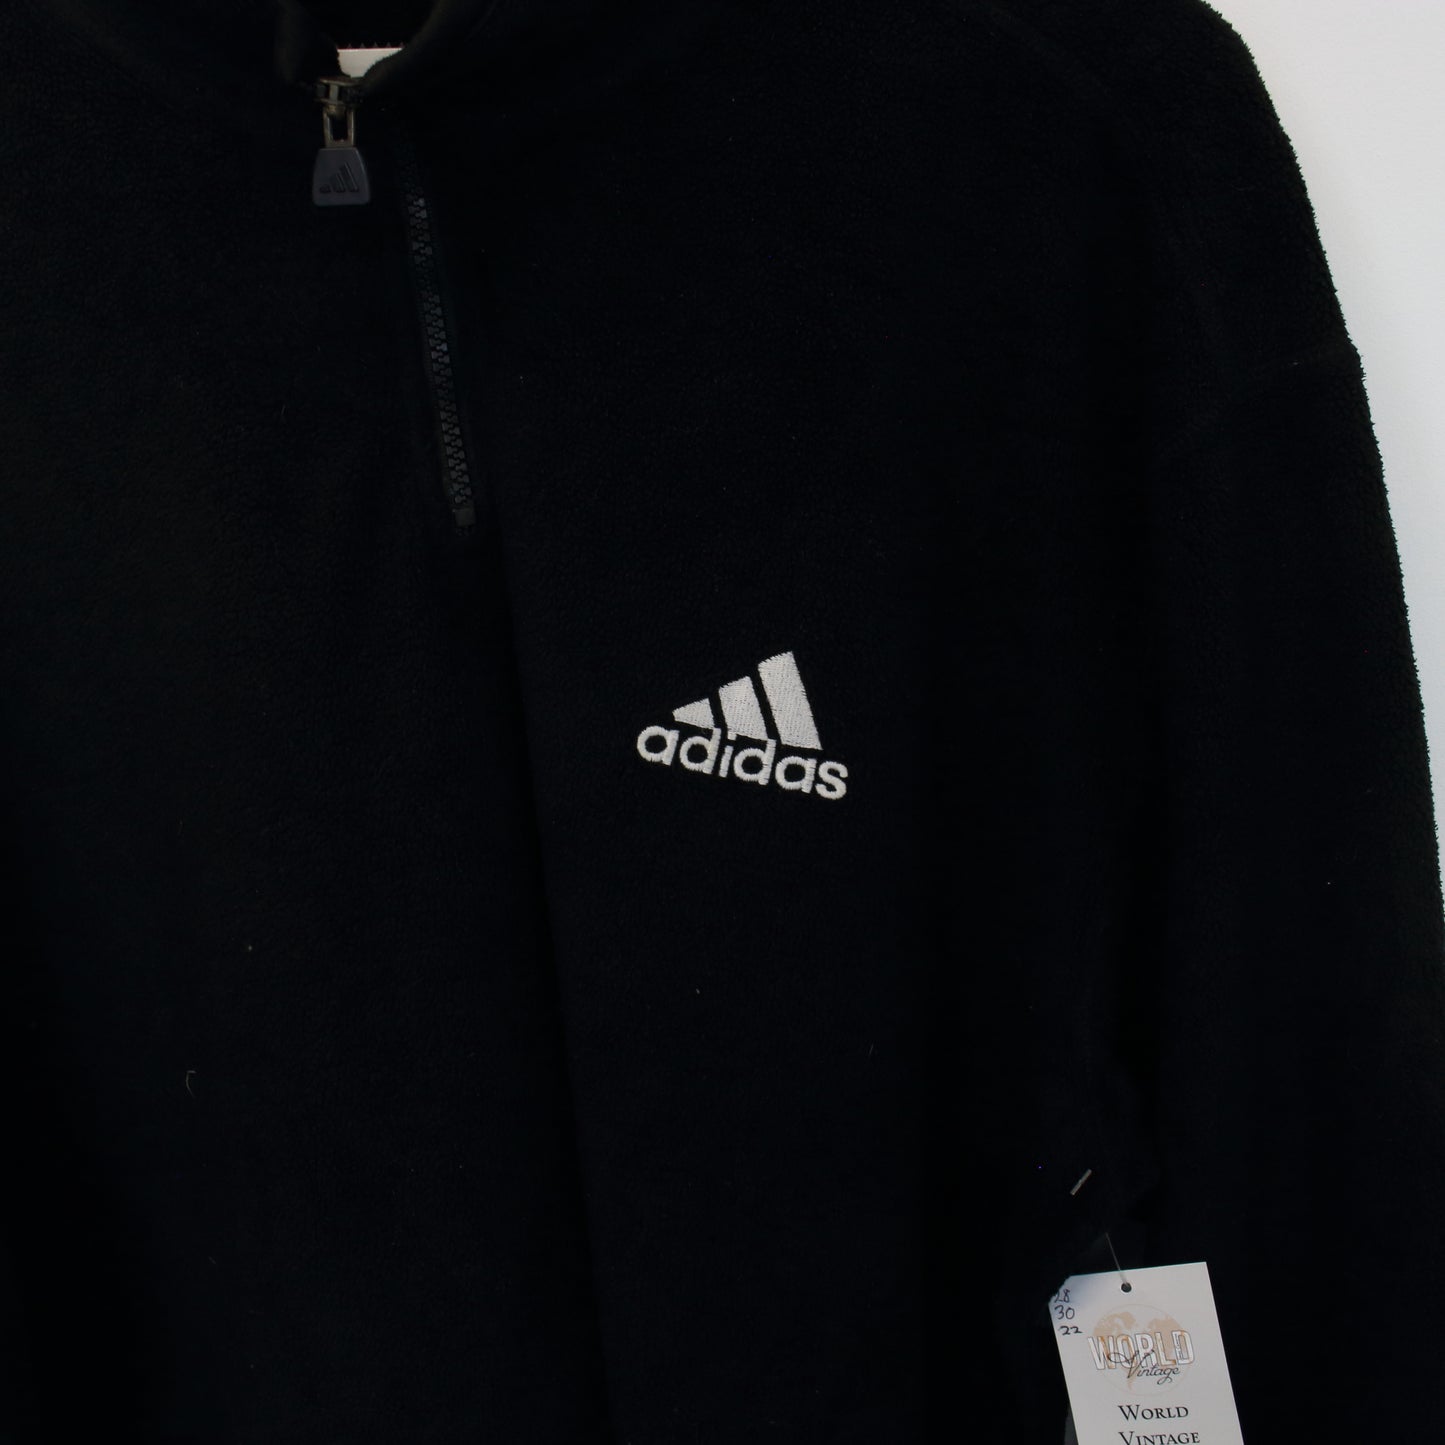 Vintage Adidas fleece in black. Best fits XL